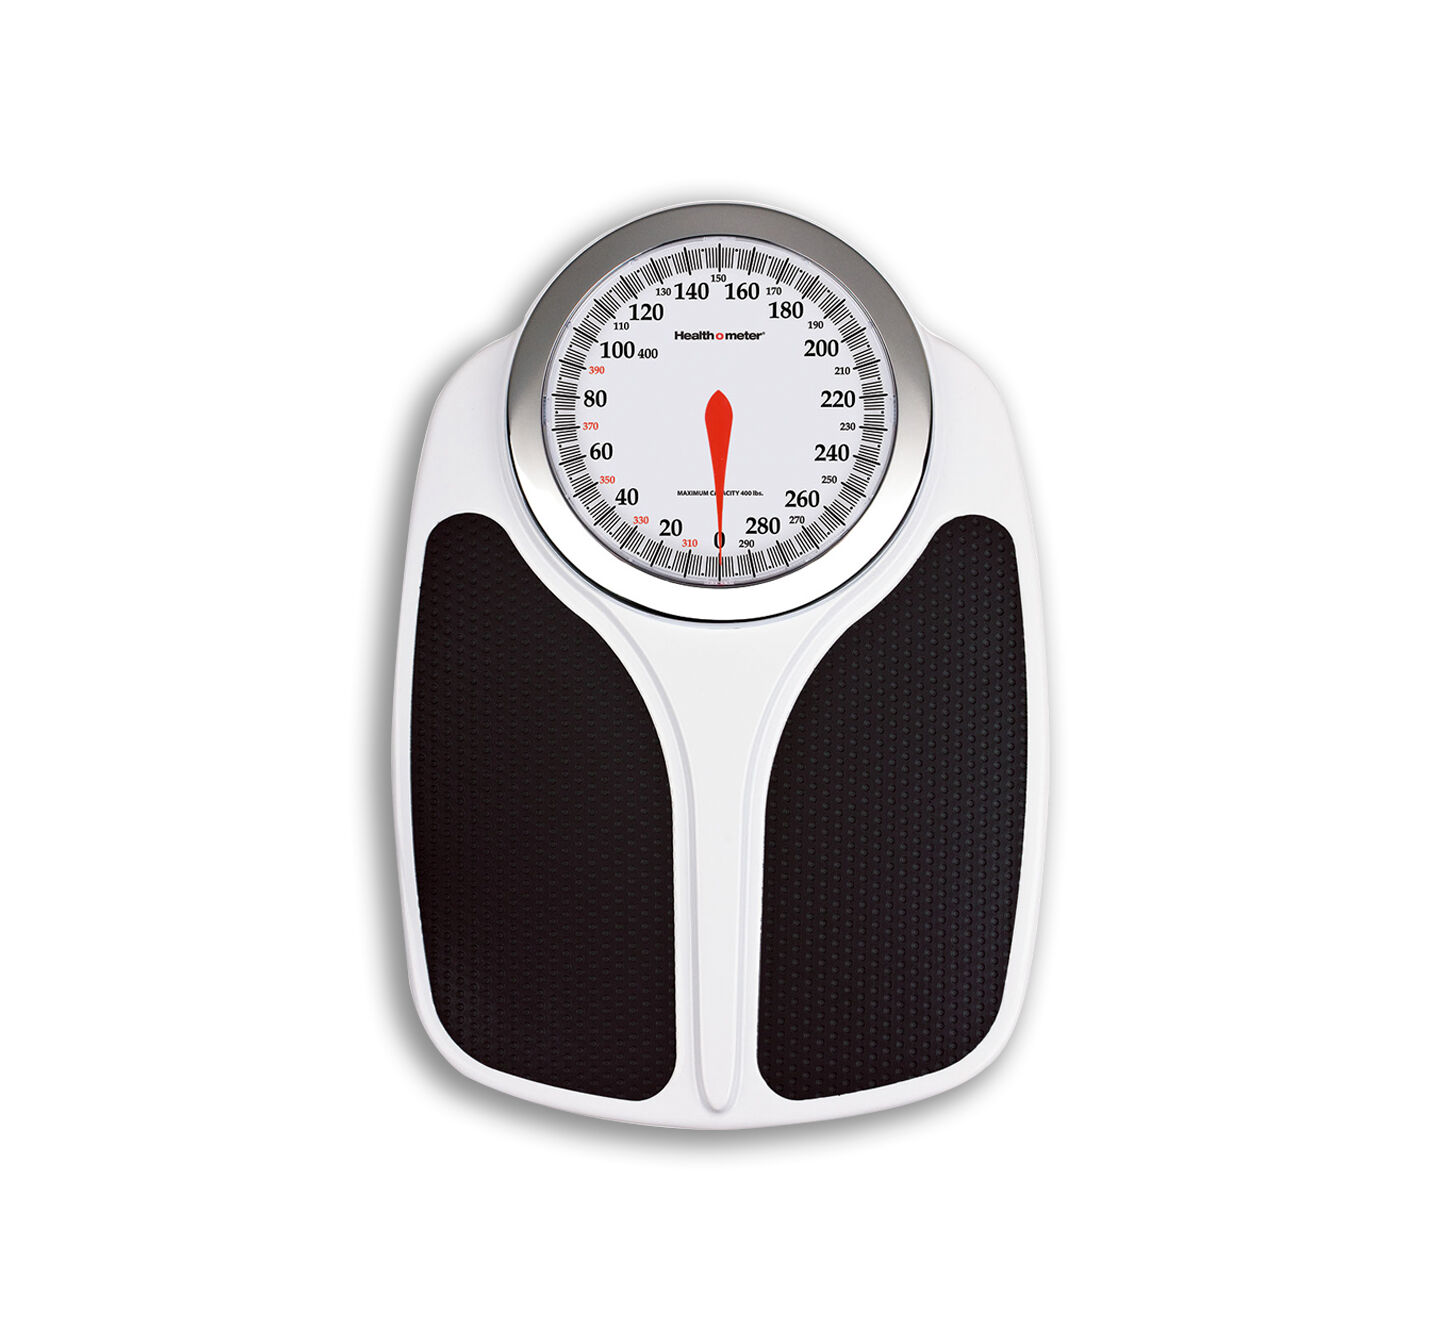 Health O Meter 499Kl Waist High Digital Medical Beam Body Weight Scale -  MedicalSupplyMi